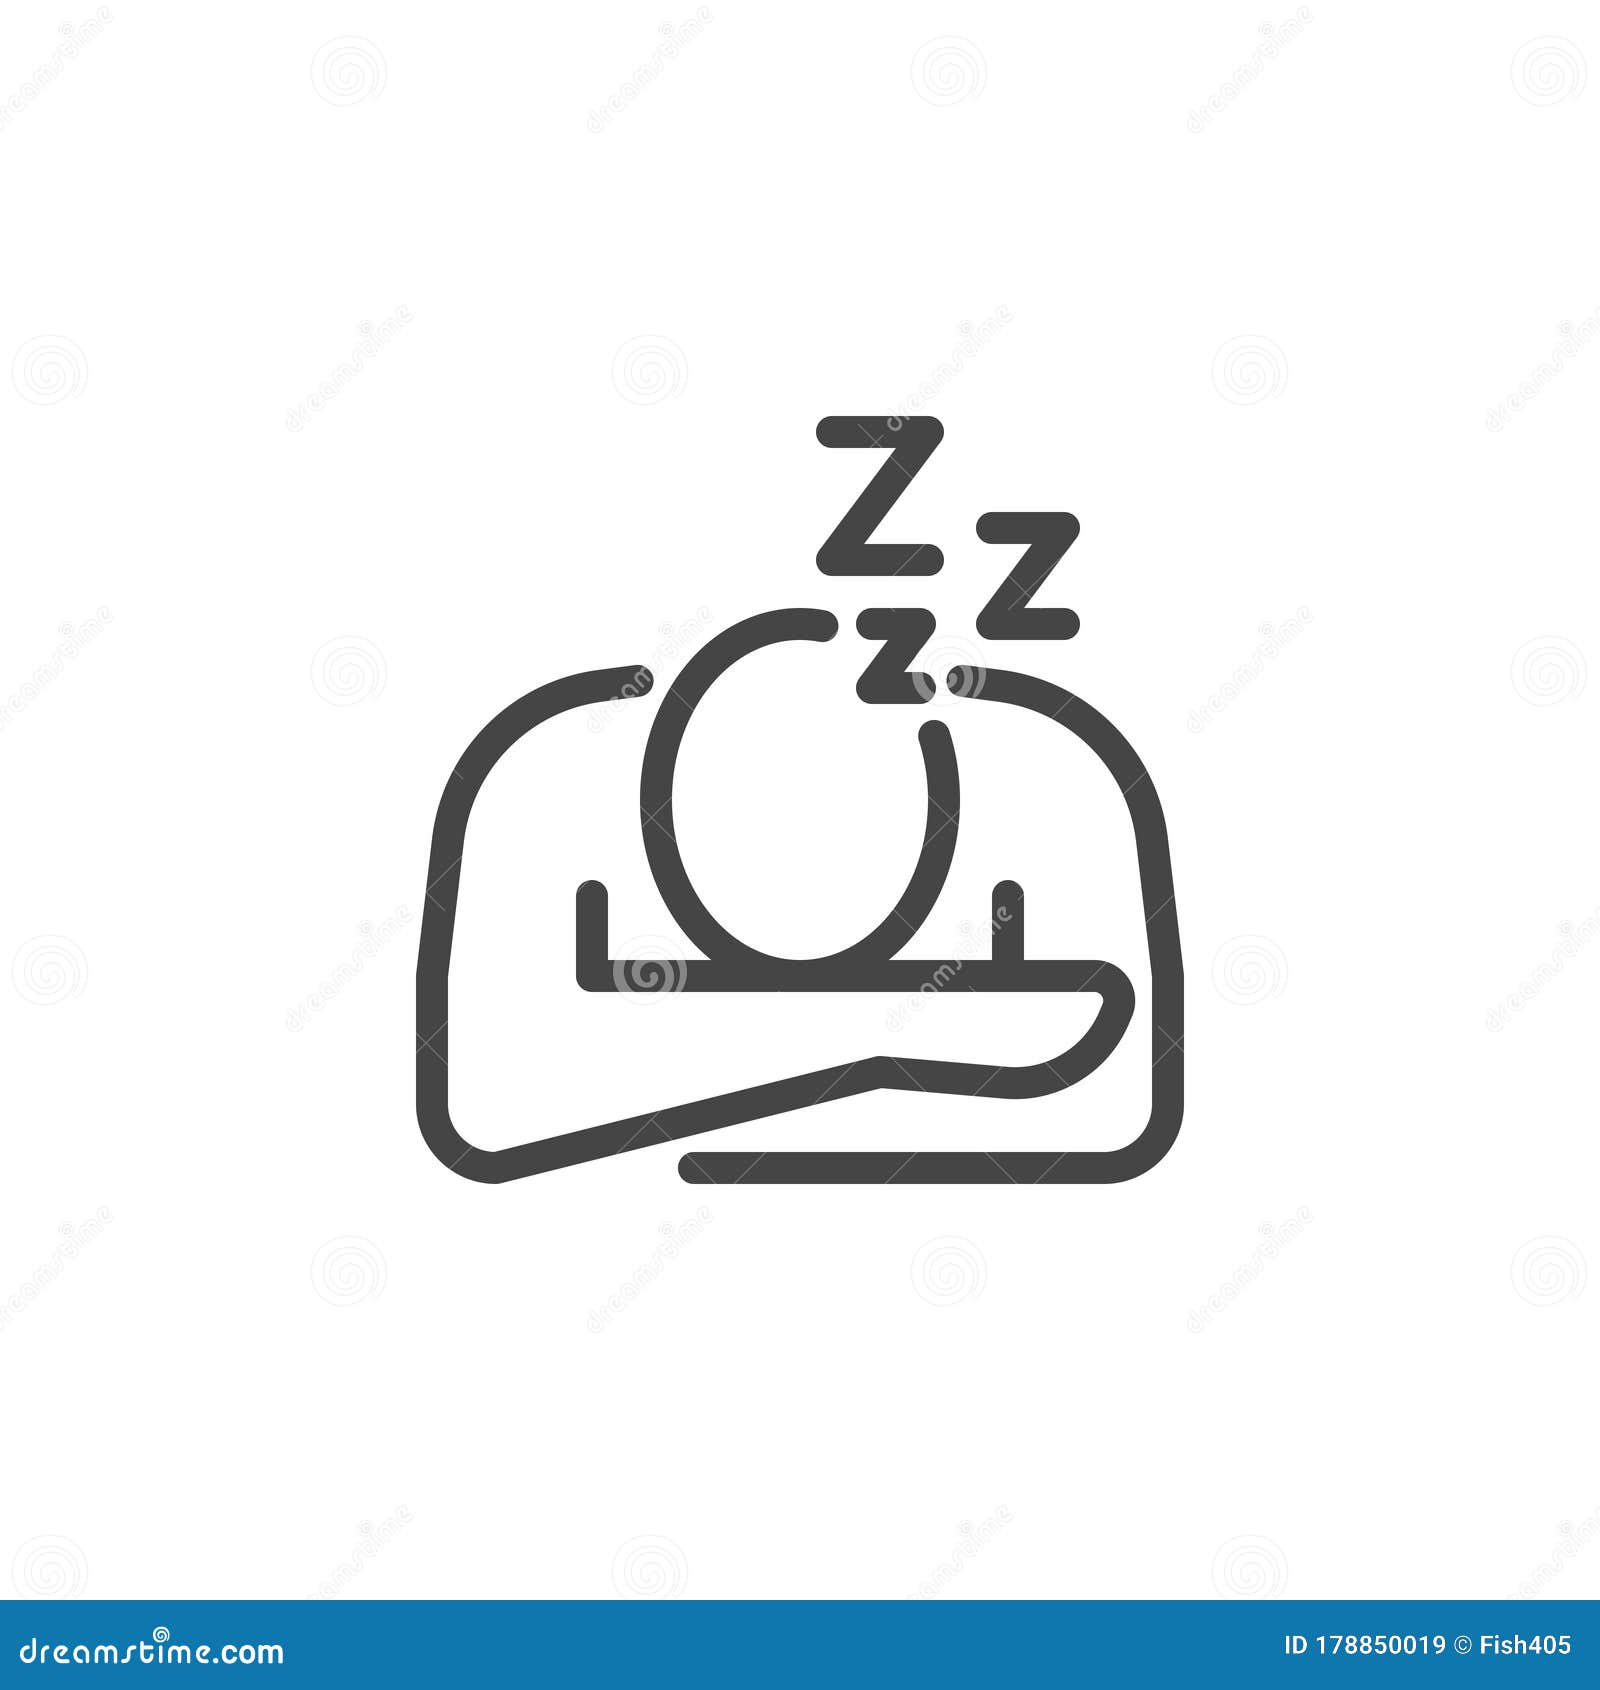 icon symptoms infection, fatigue burnout sleeping work